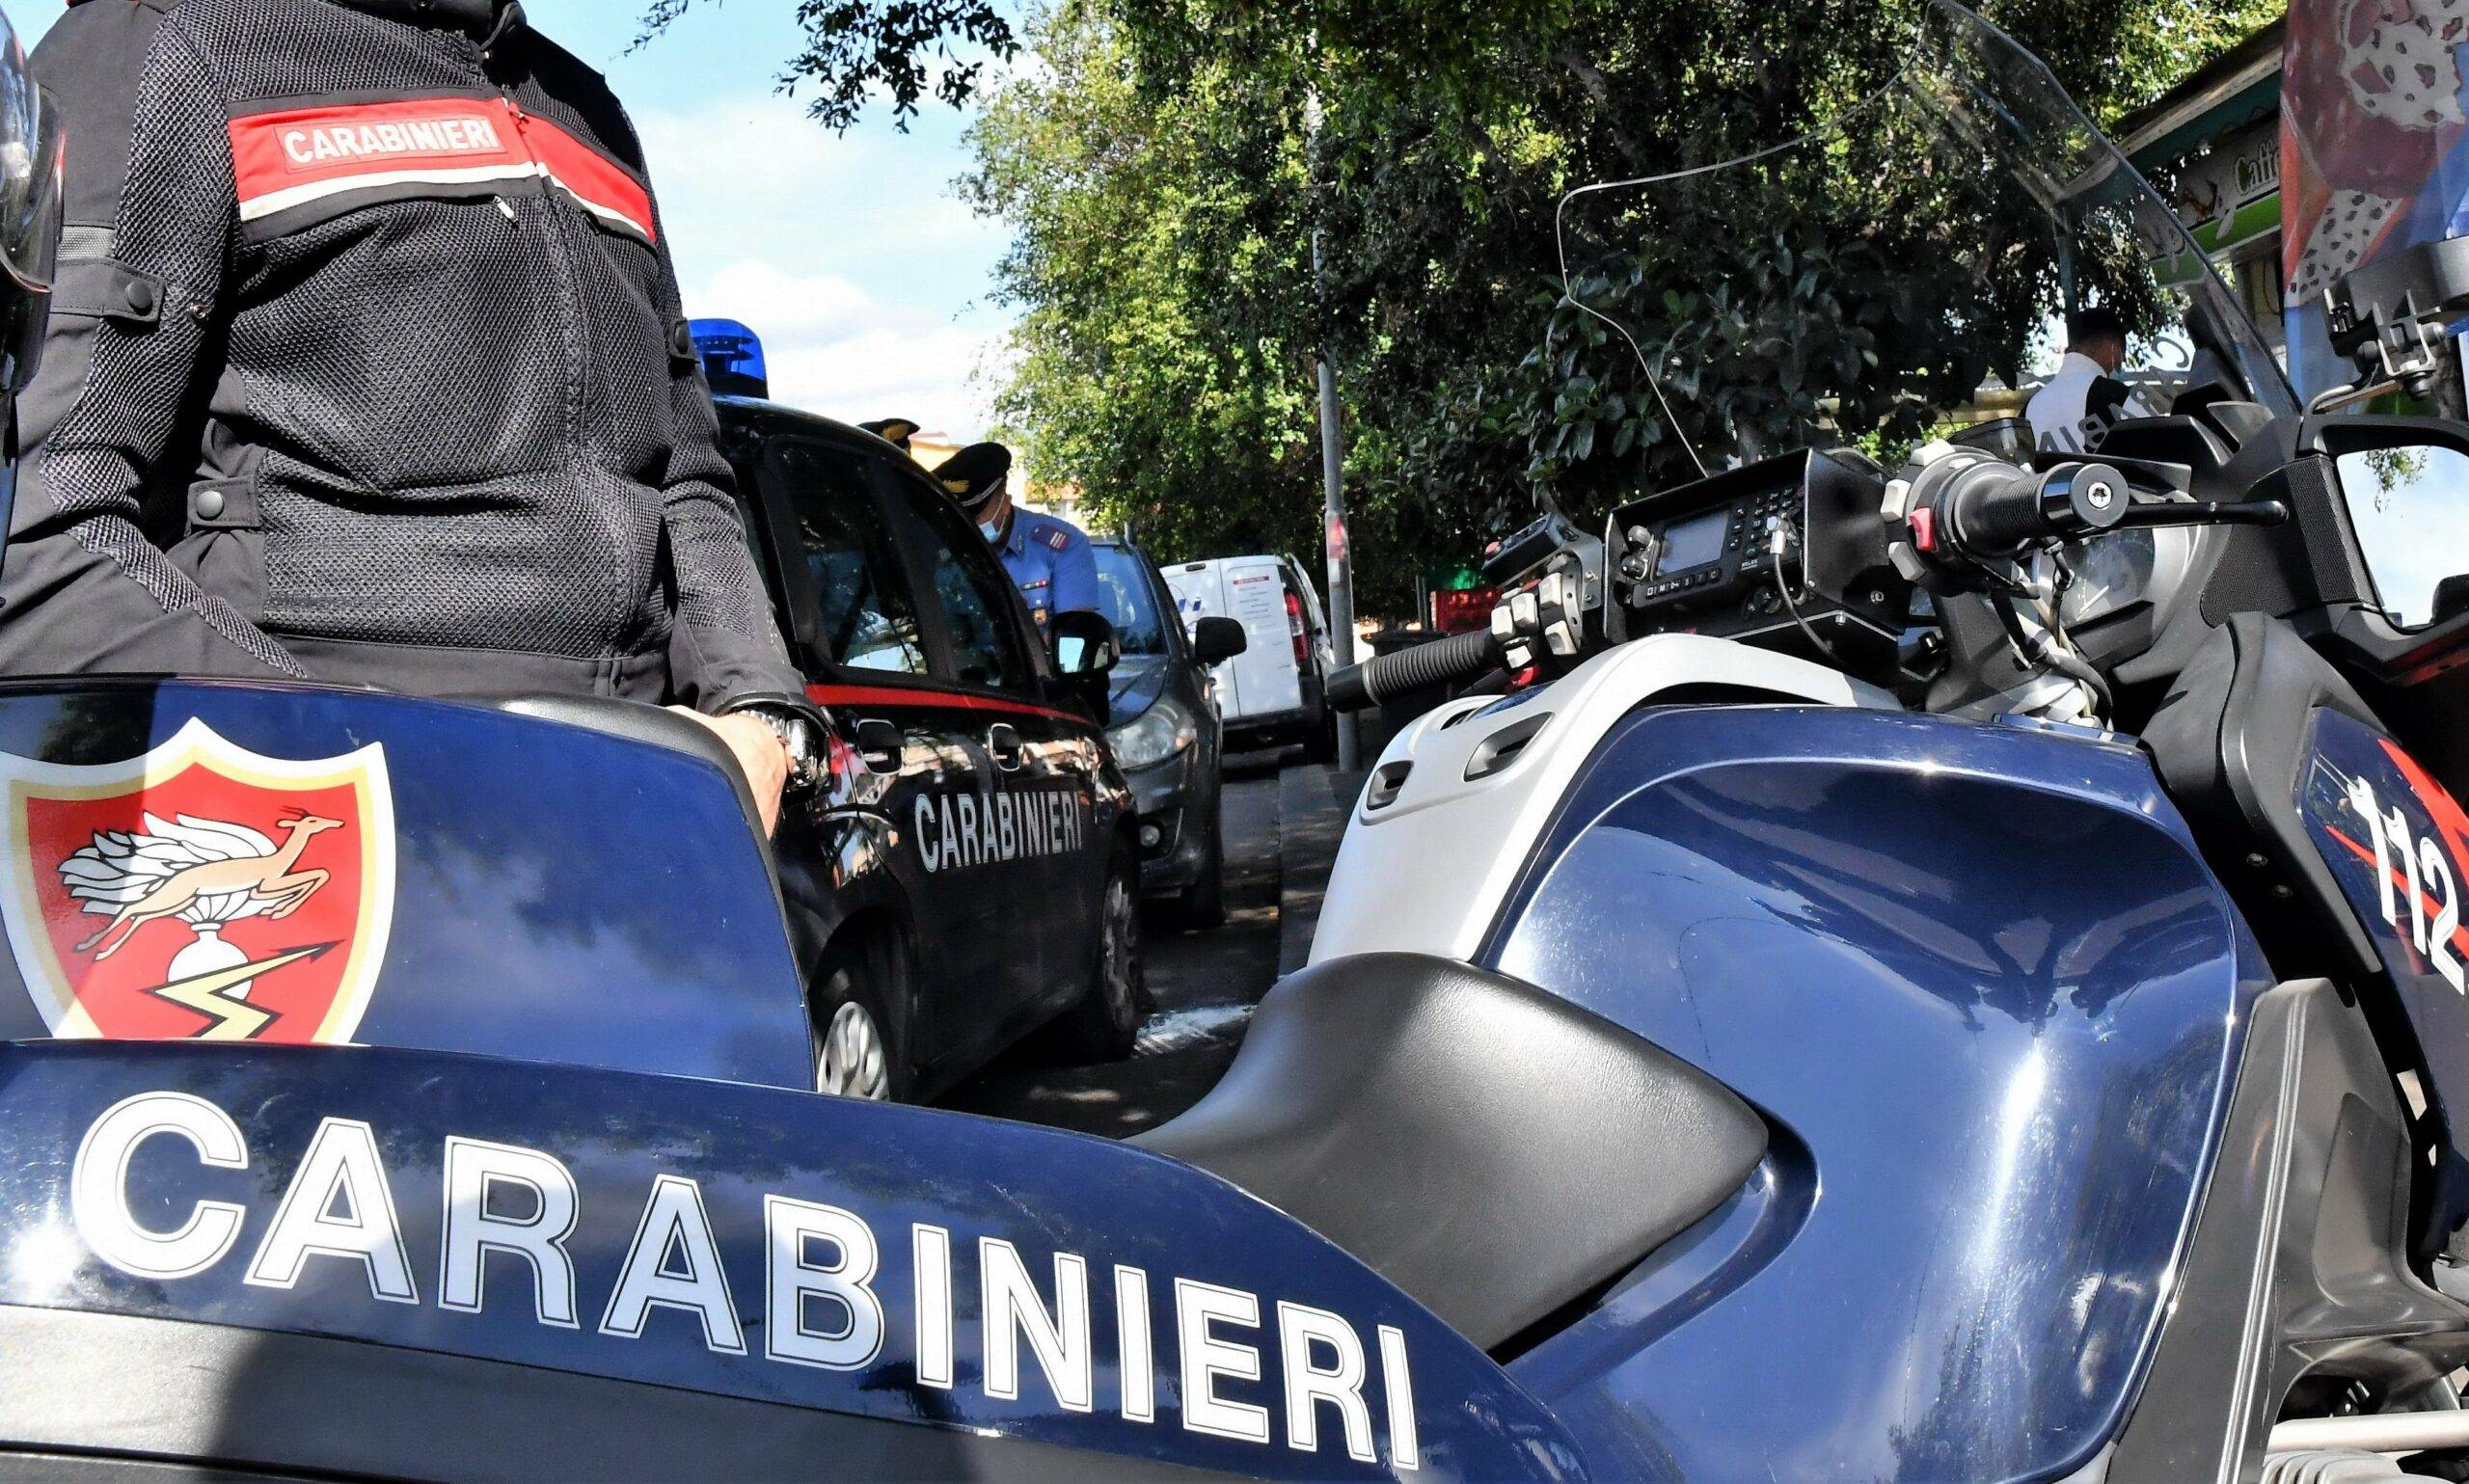 carabinieri-11-scaled.jpg